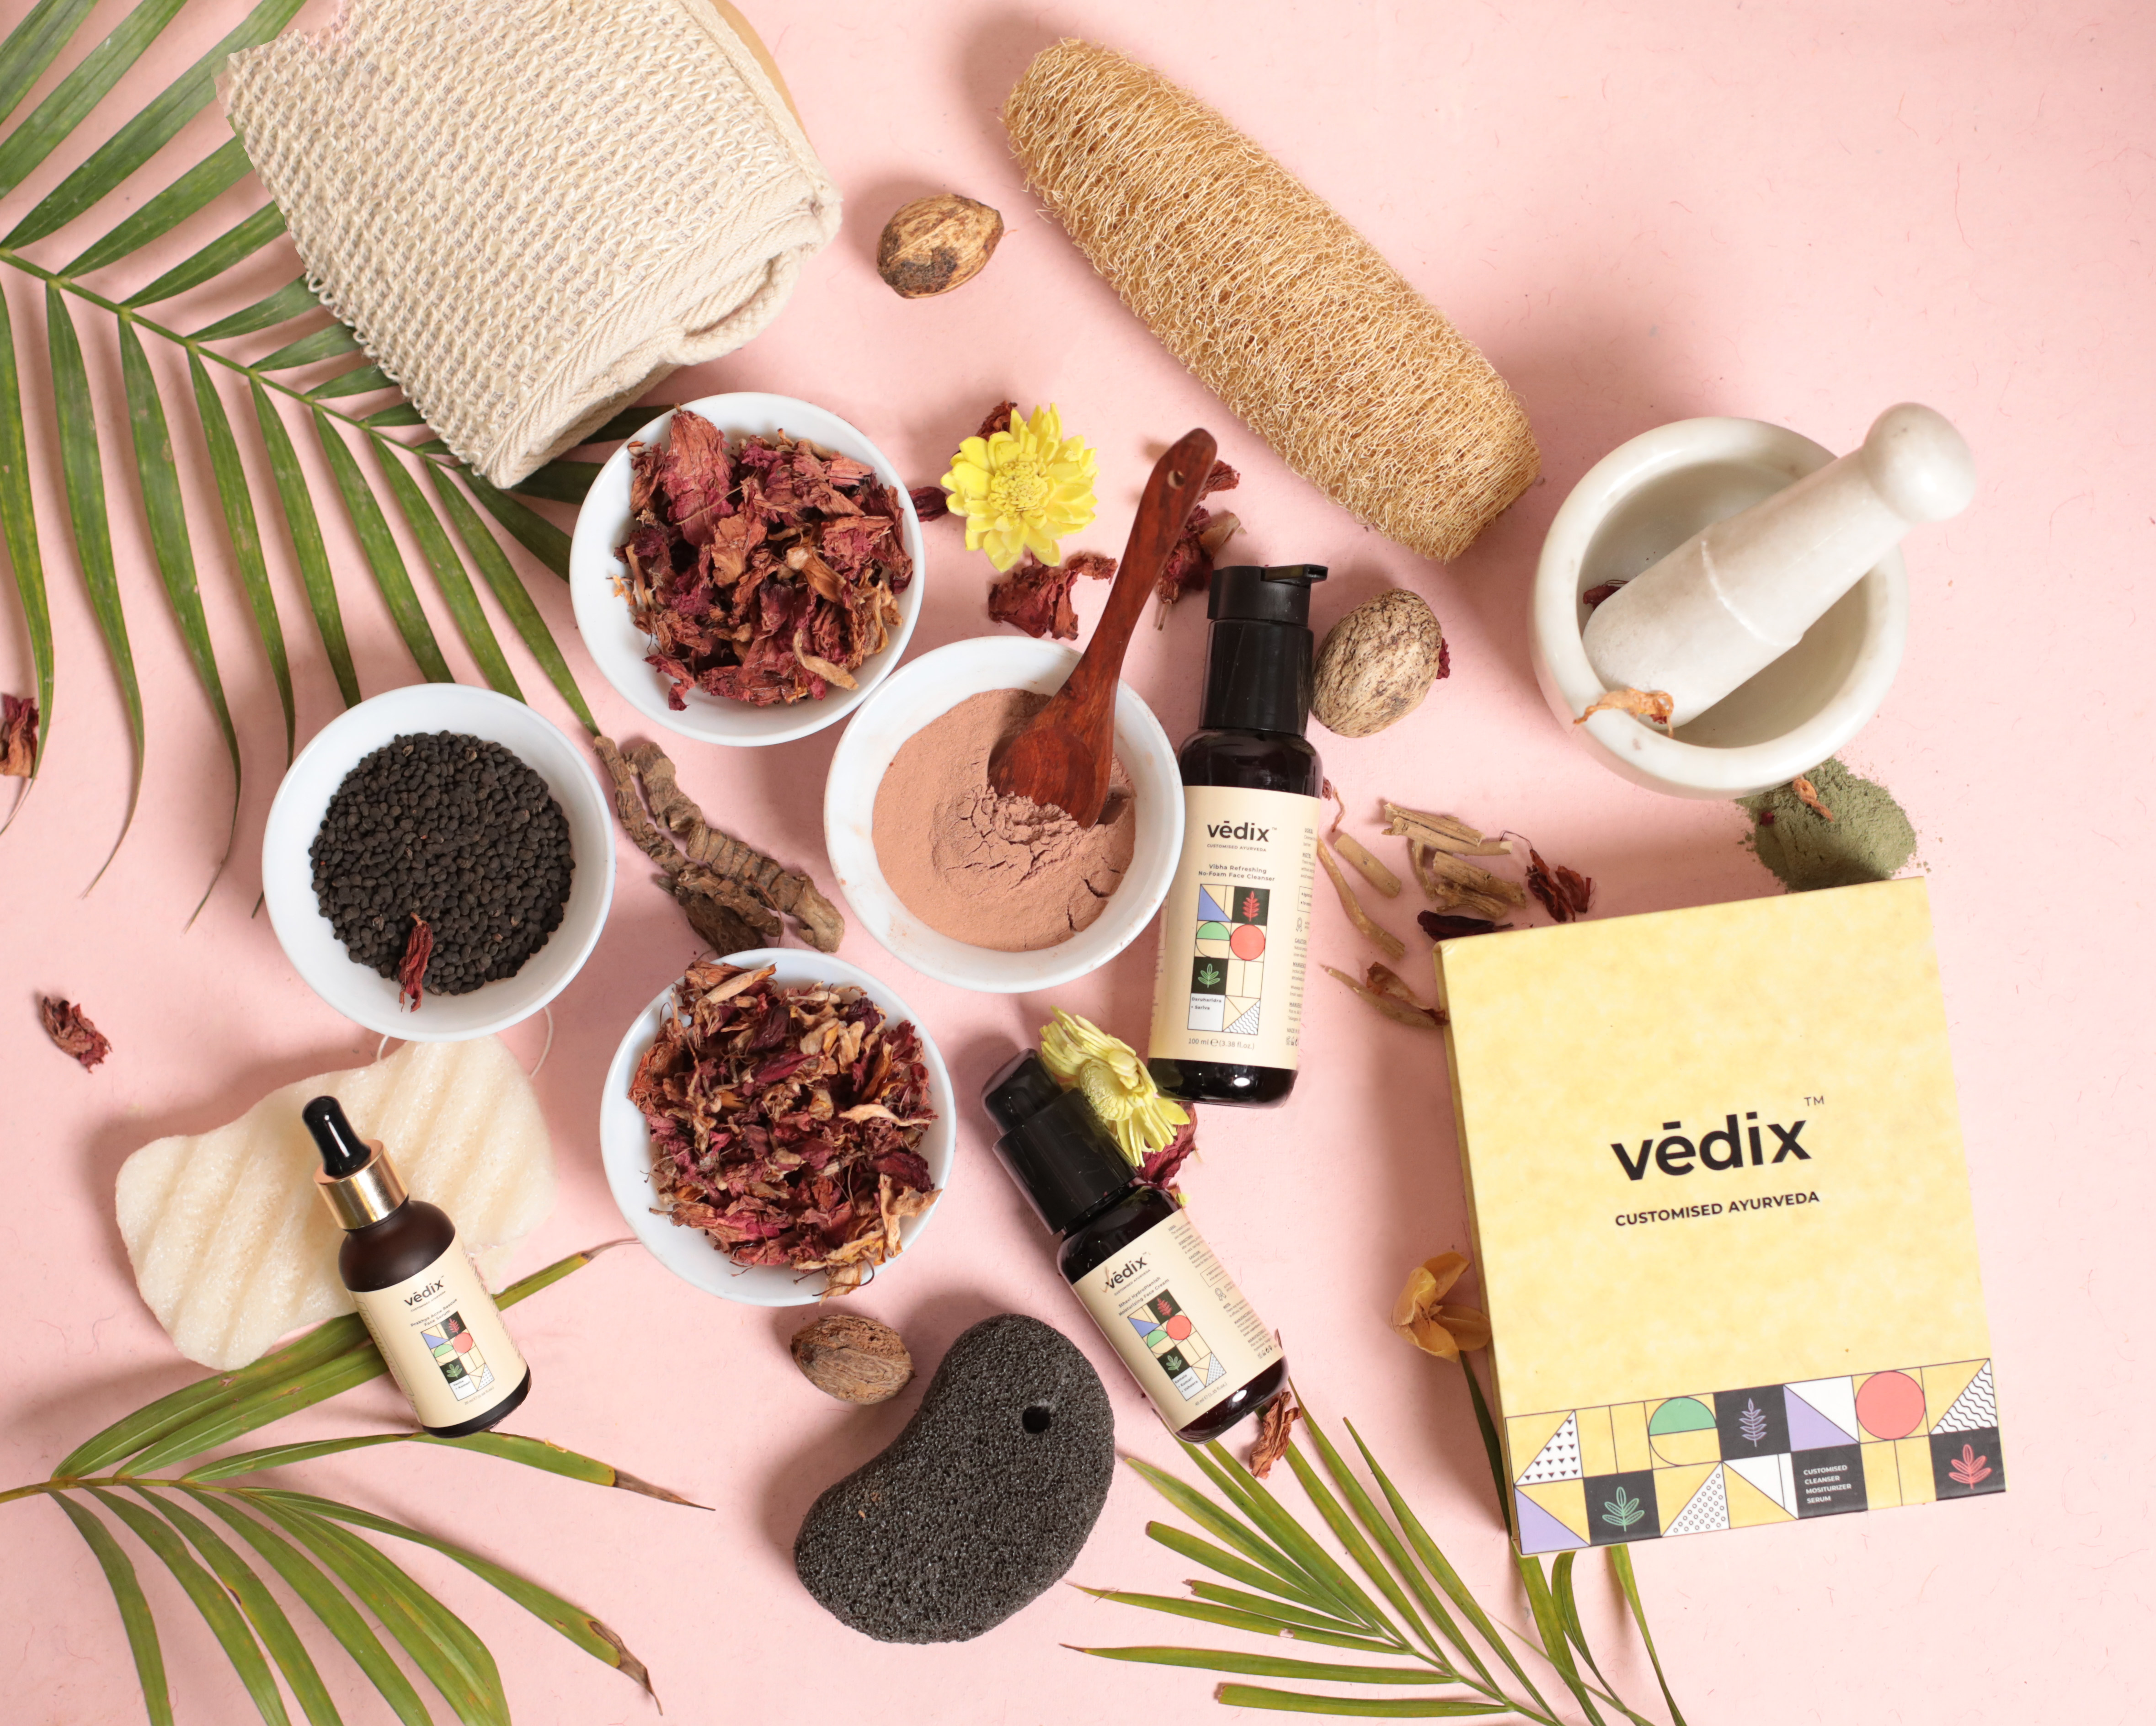 Vedix, India’s first customized Ayurvedic Lifestyle and wellness brand eyeing to tap key regional markets